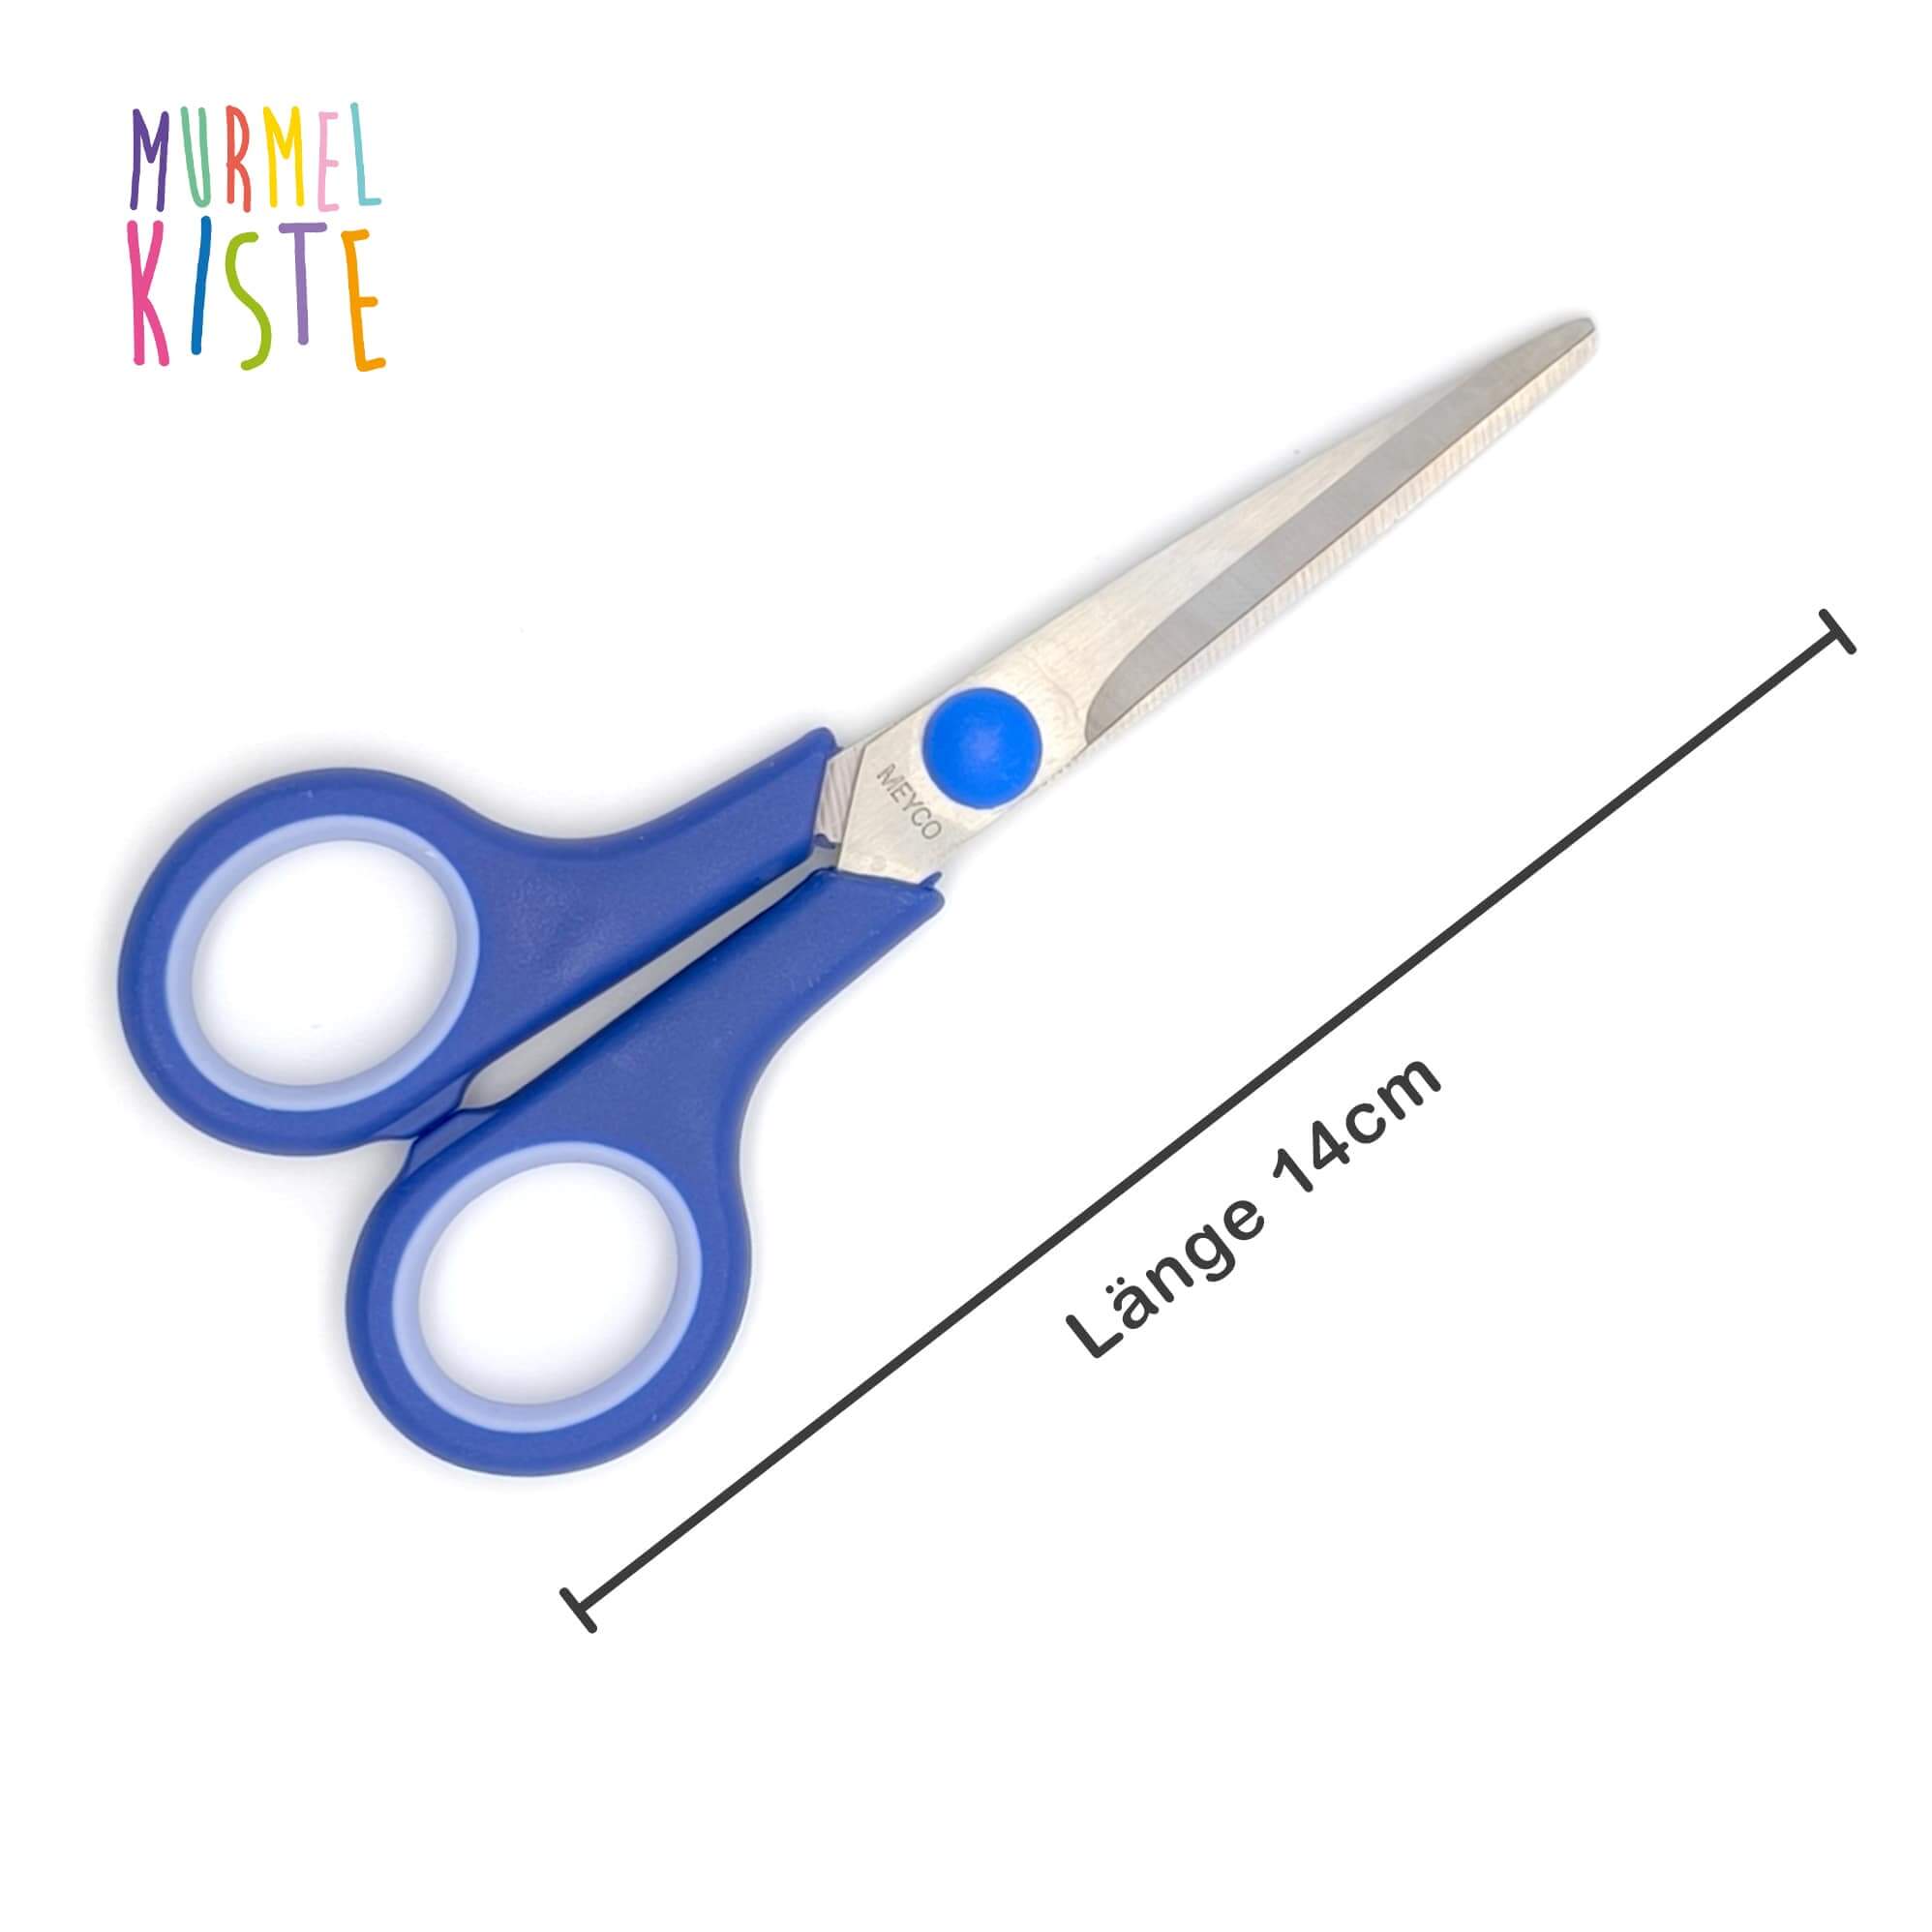 Craft scissors for children - size 5"